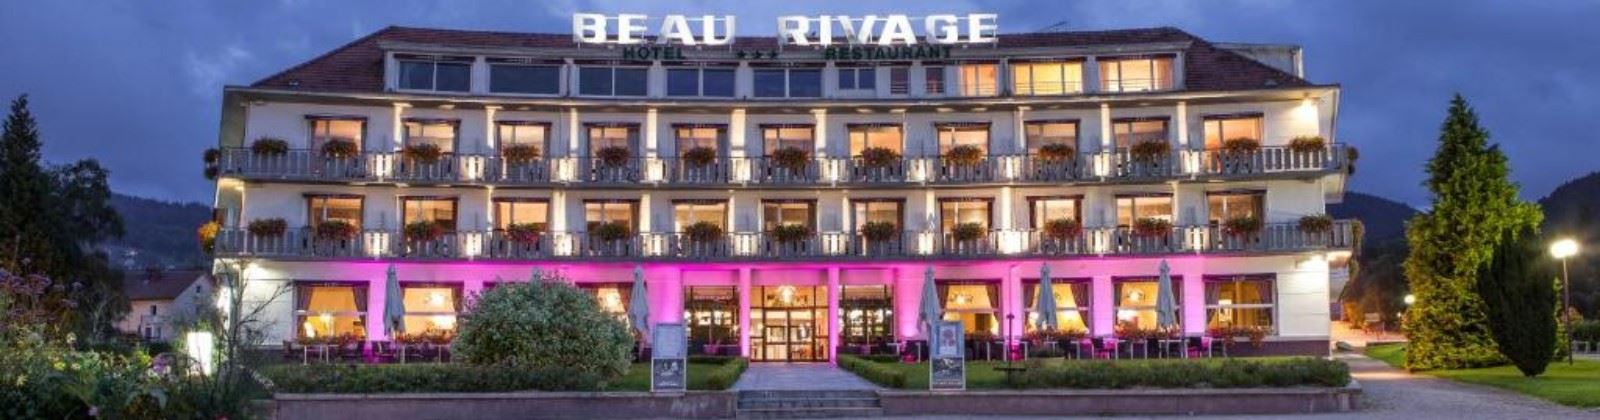 OLEVENE image - hotel-beau-rivage-olevene-restaurant-seminaire-booking-